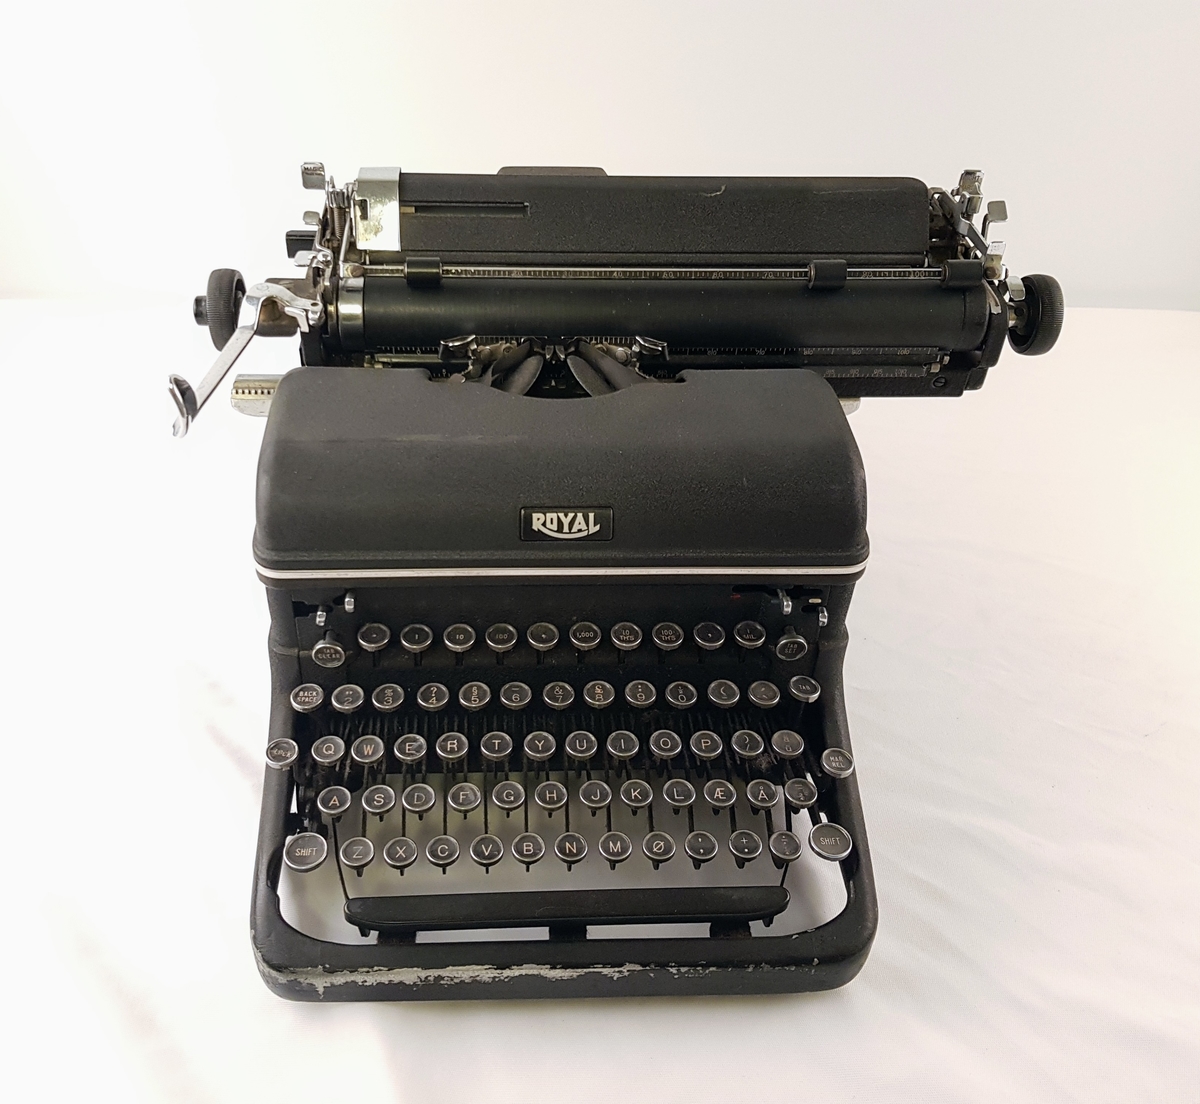 Sort Royal skrivemaskin med hus og runde taster.